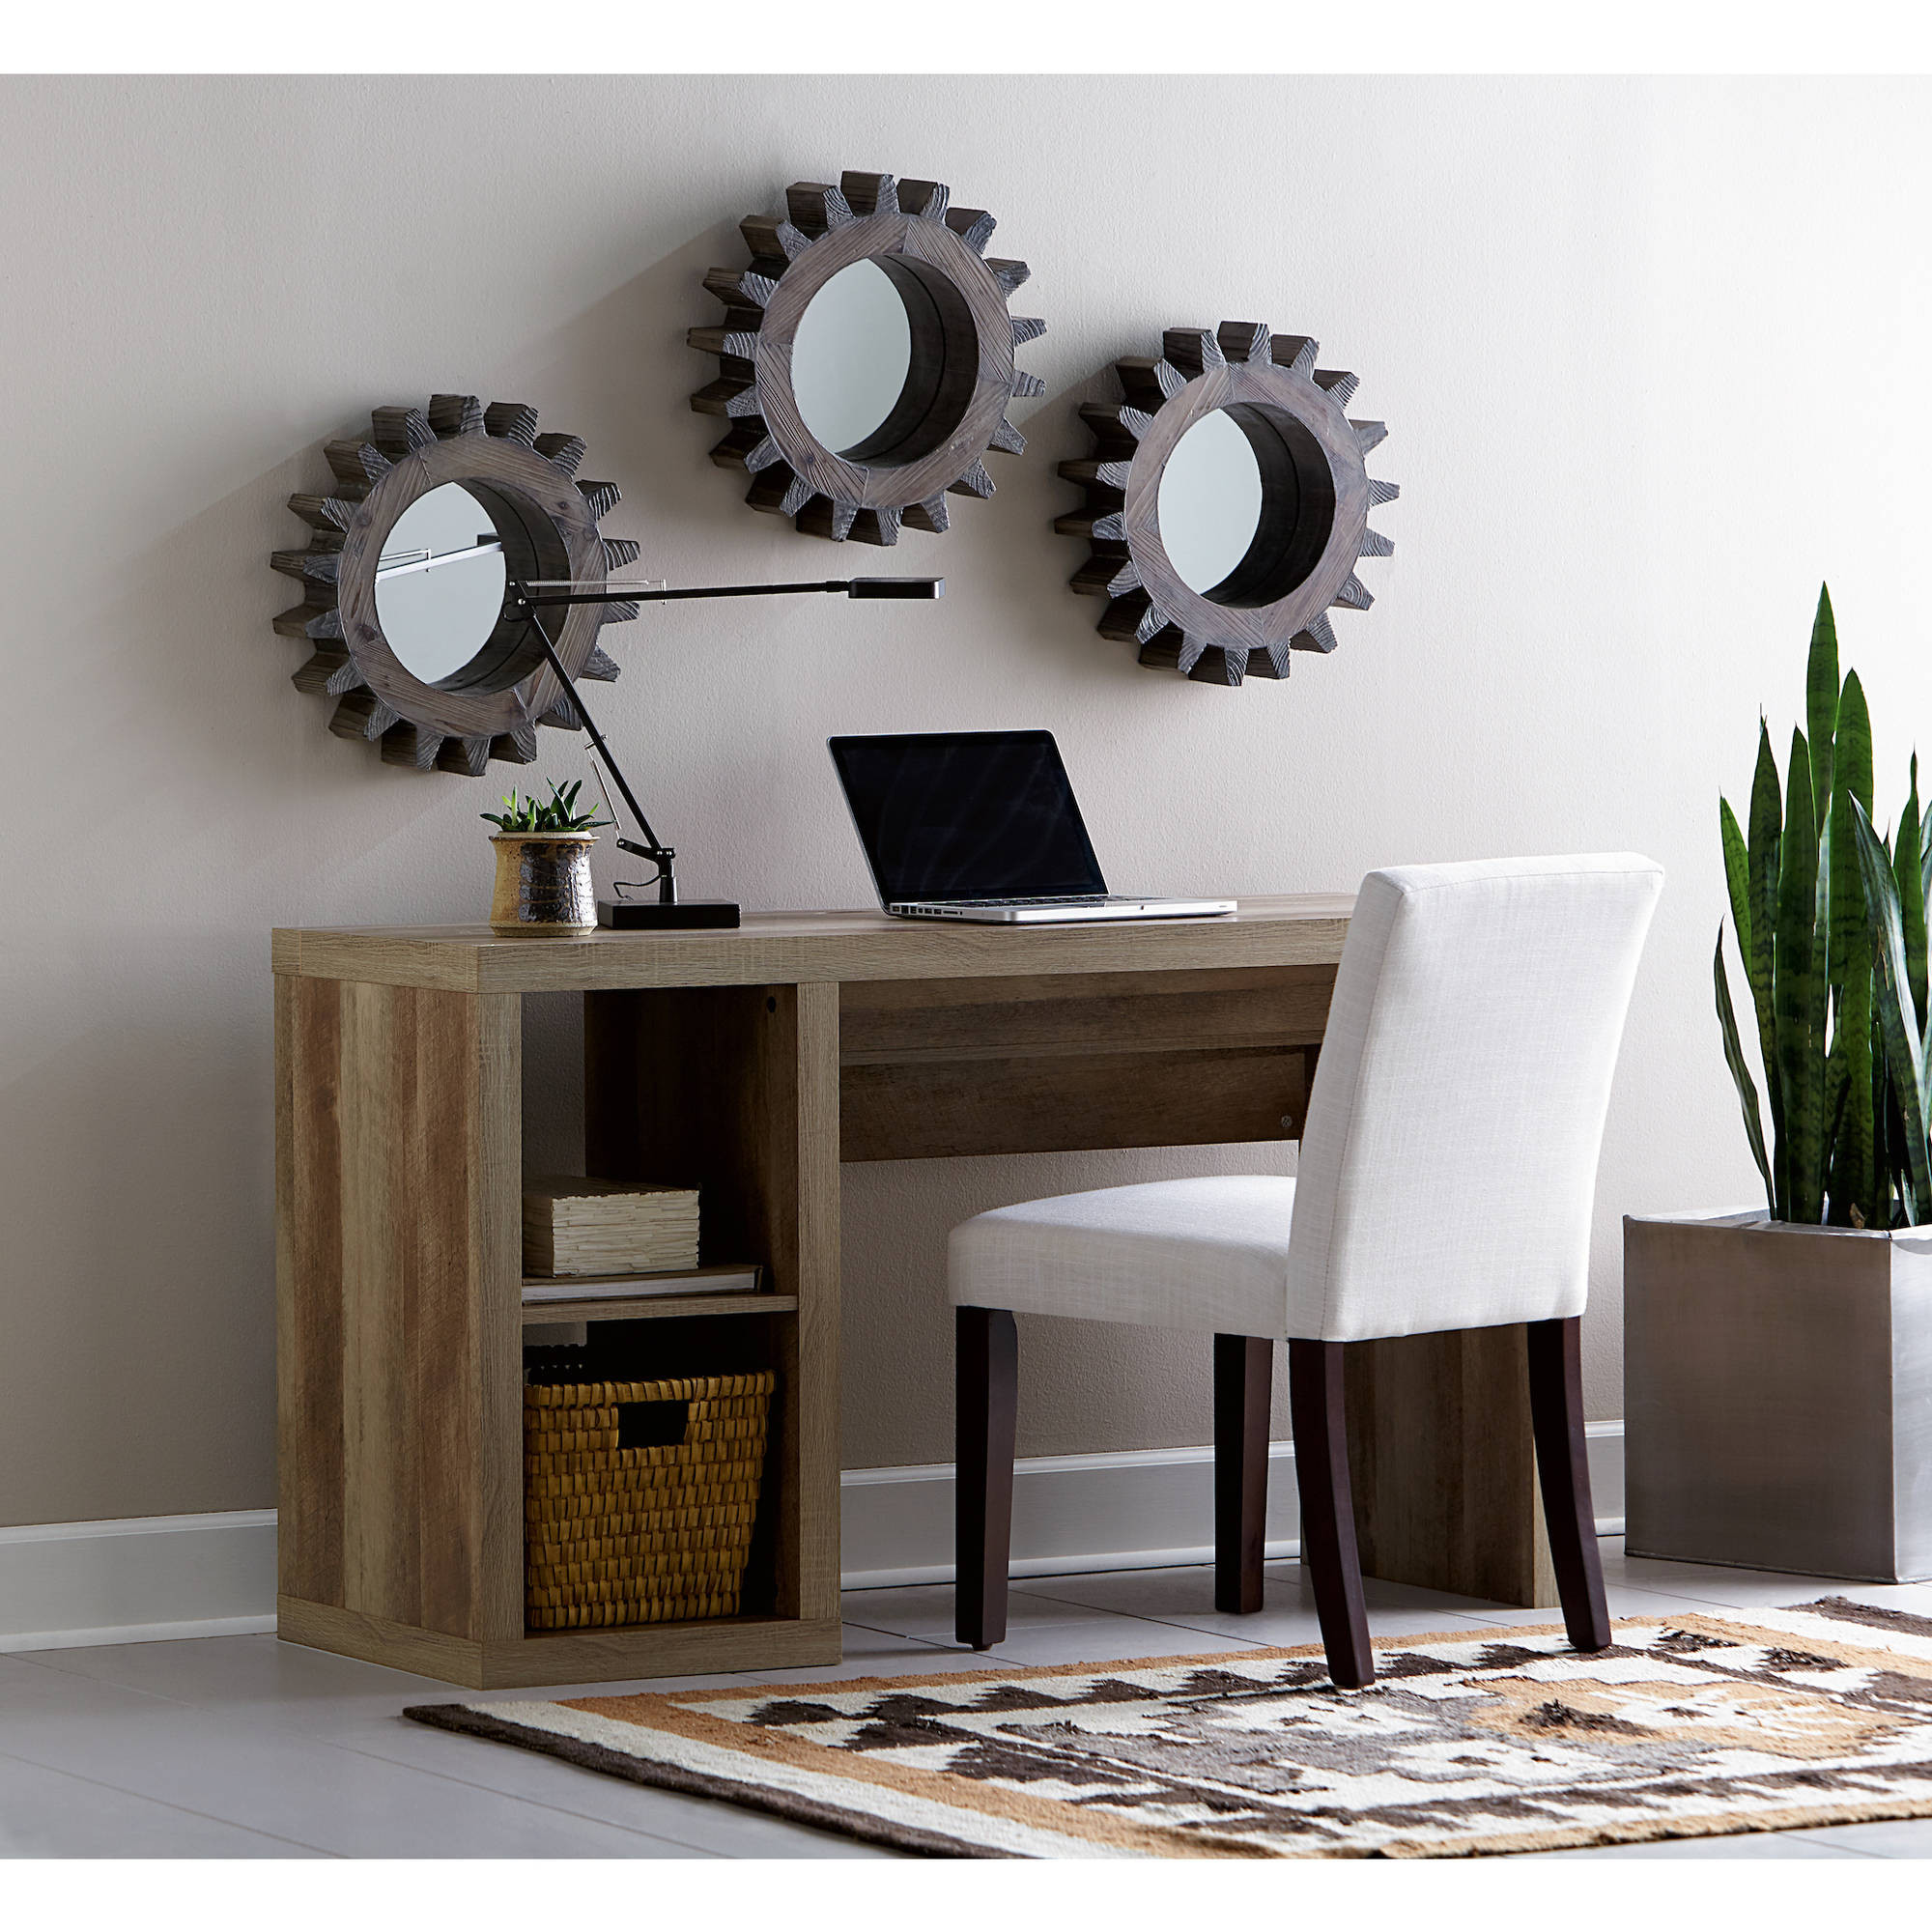 Top 20 Cube organizer Desk - Home Inspiration and DIY ...